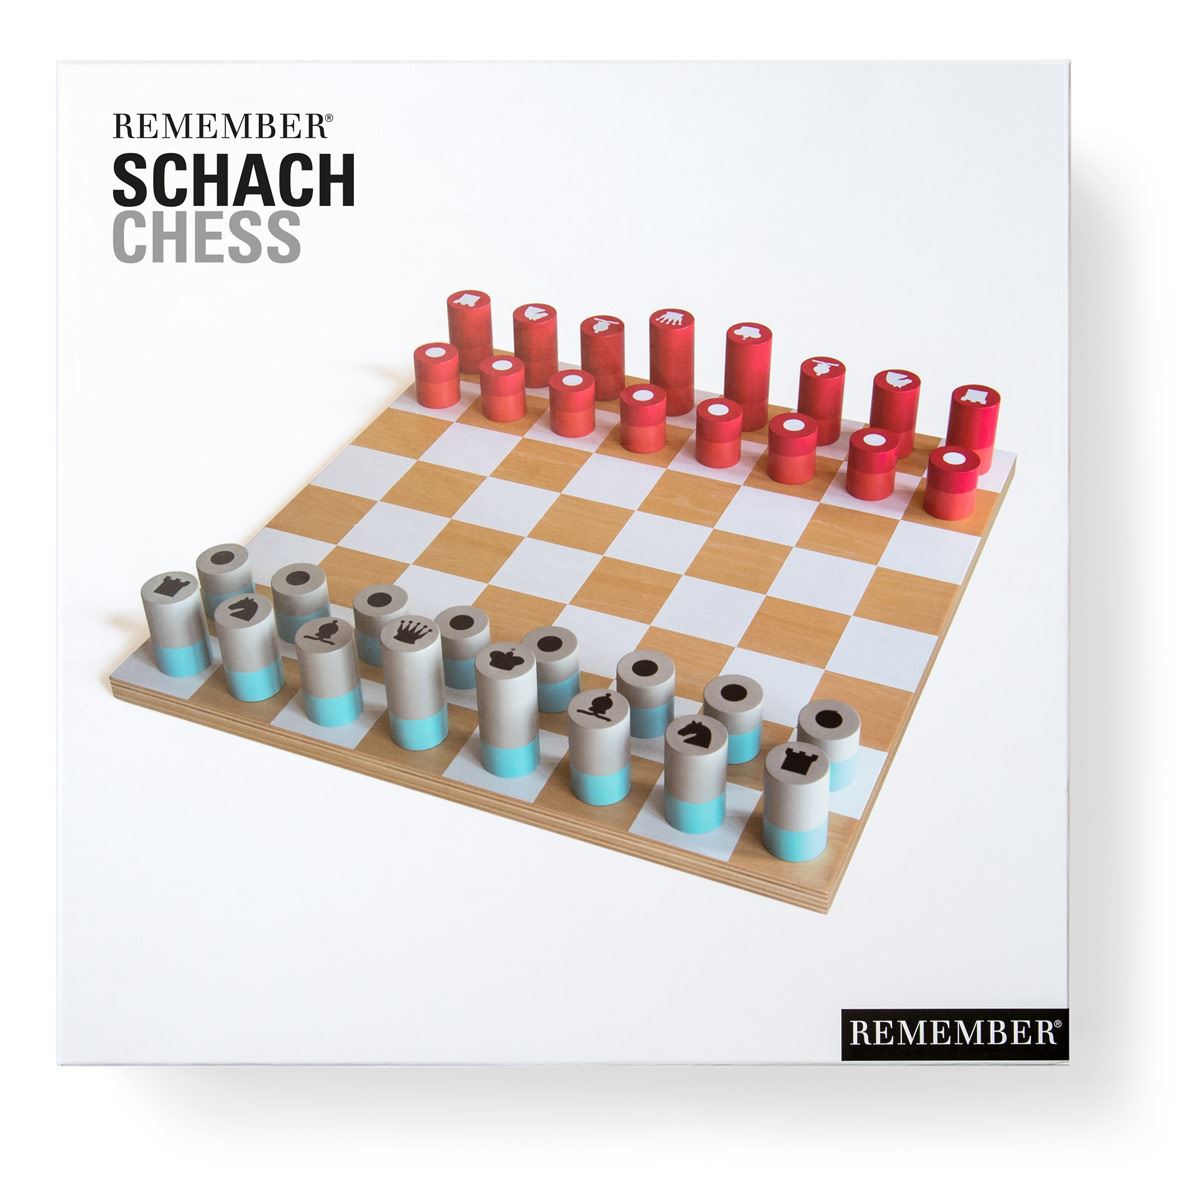 Schach Chess